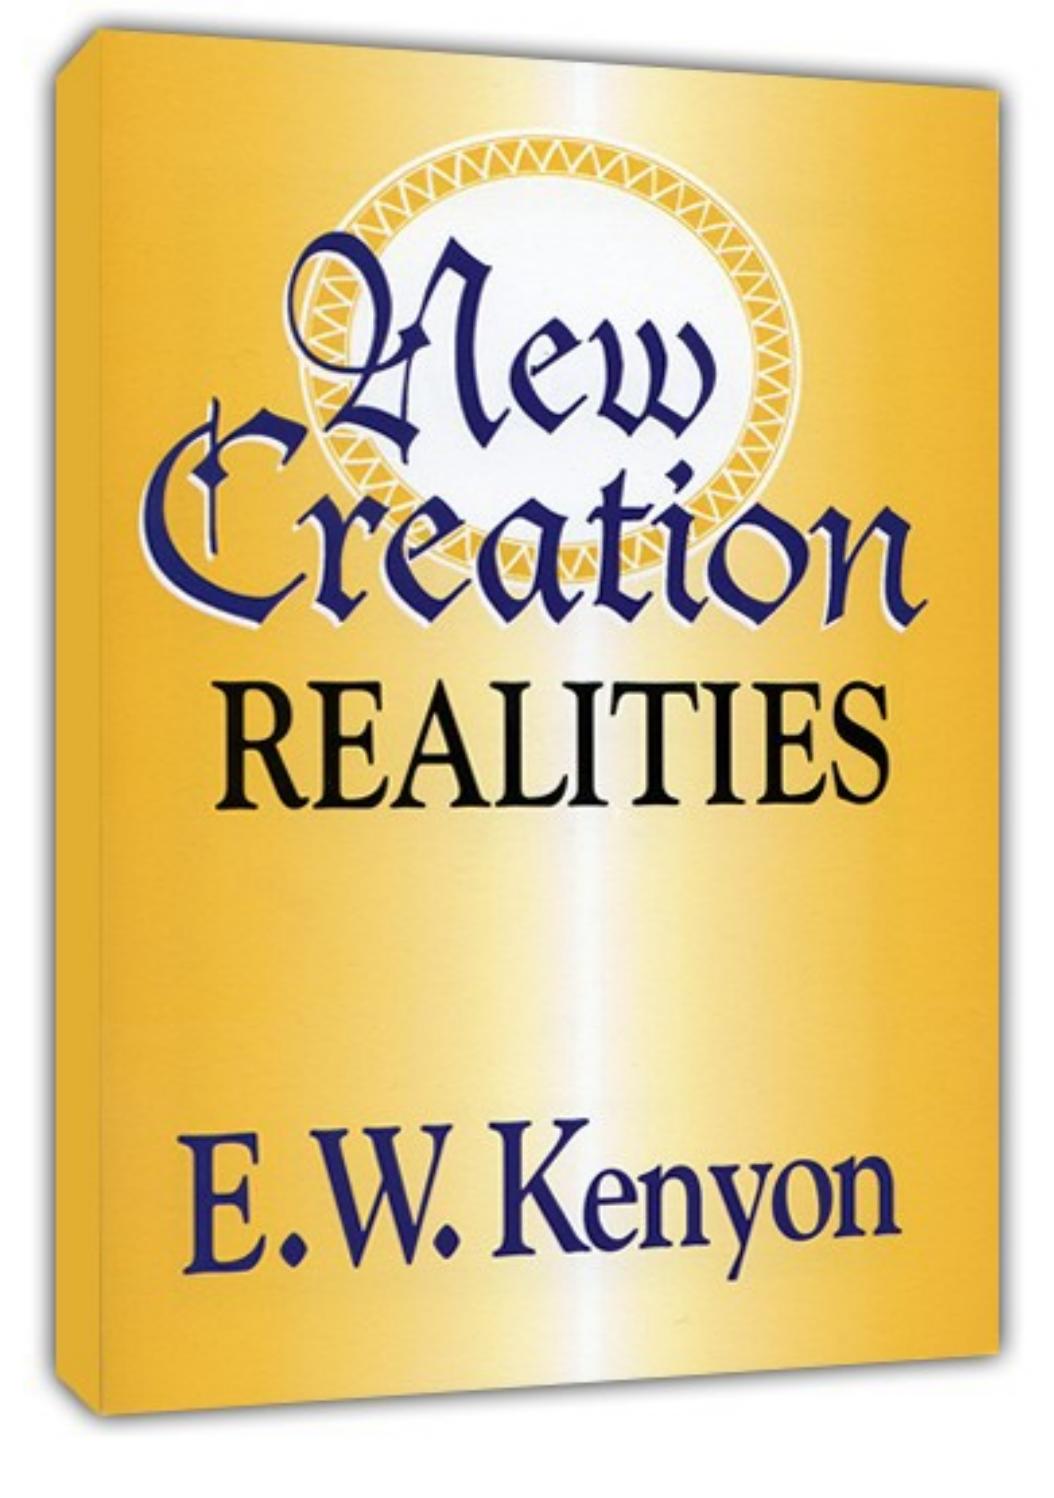 New Creation Realities by E. W. Kenyon - Dead Tree Dreams Bookstore